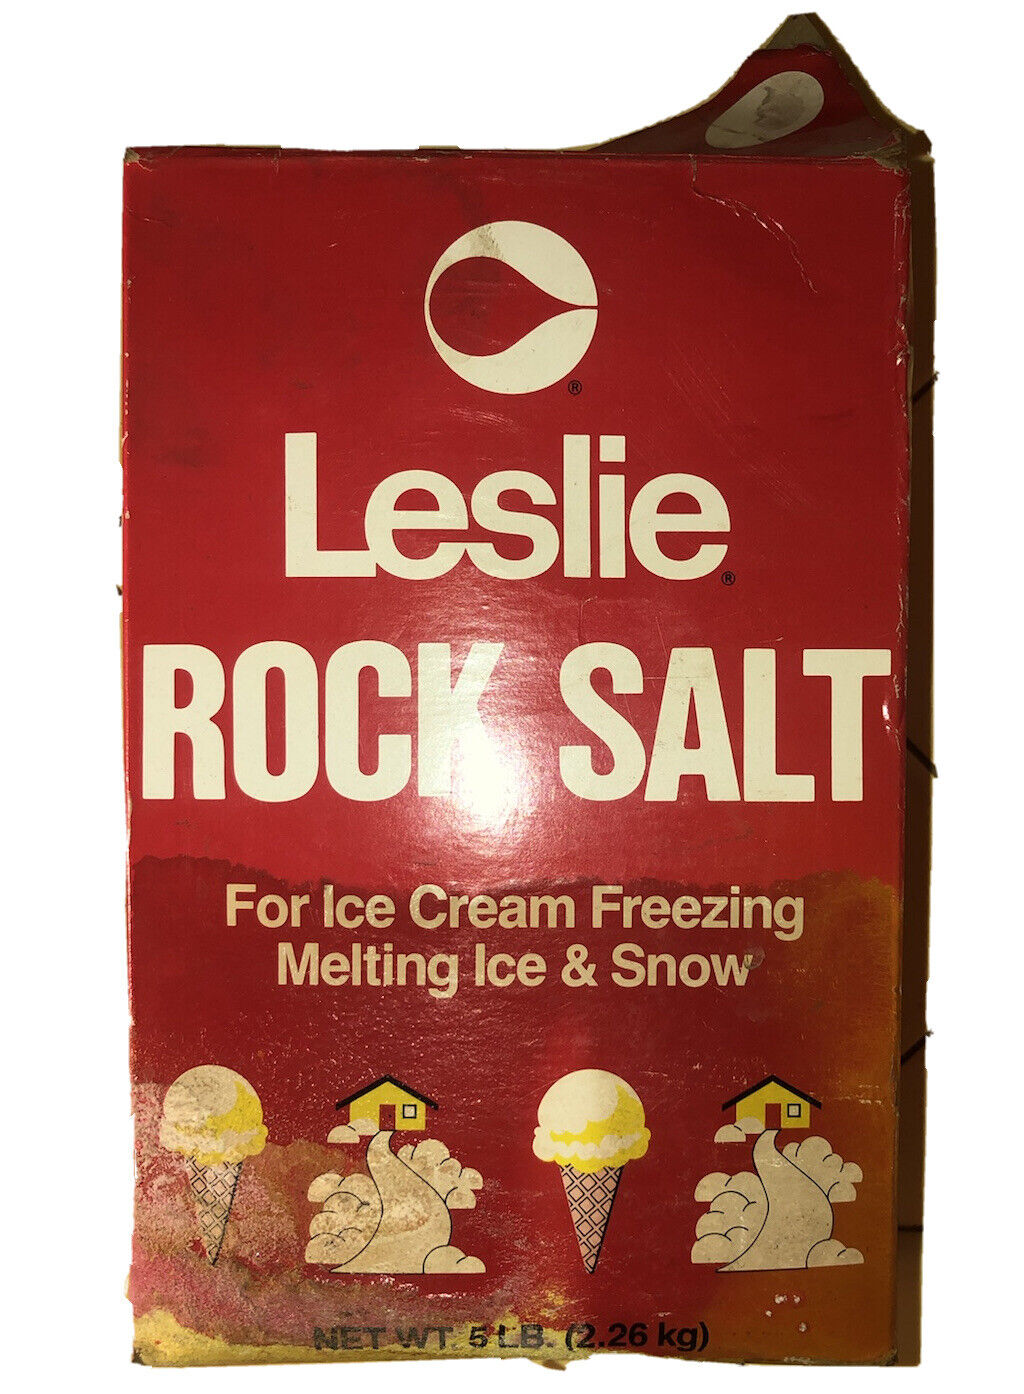 Leslie Rock Salt Ice Cream Freezing/Melting Snow Box (lots inside) 1960’s-70s 